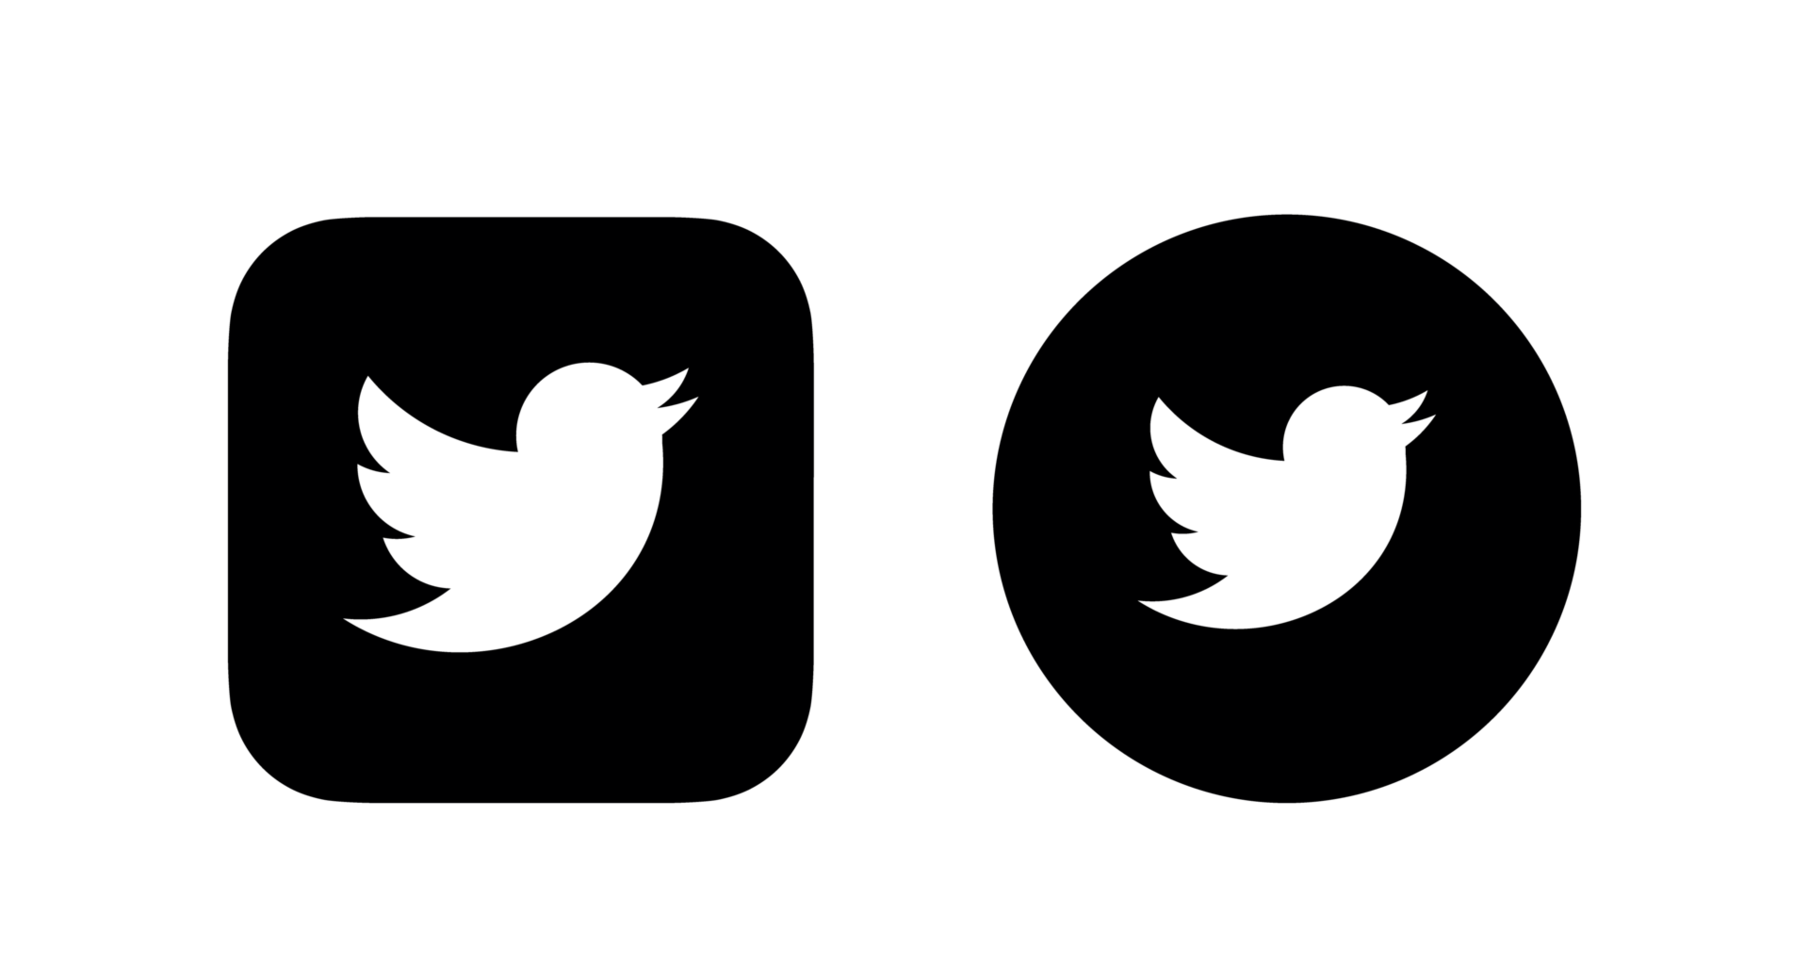 logotipo do twitter png, ícone do twitter transparente png grátis